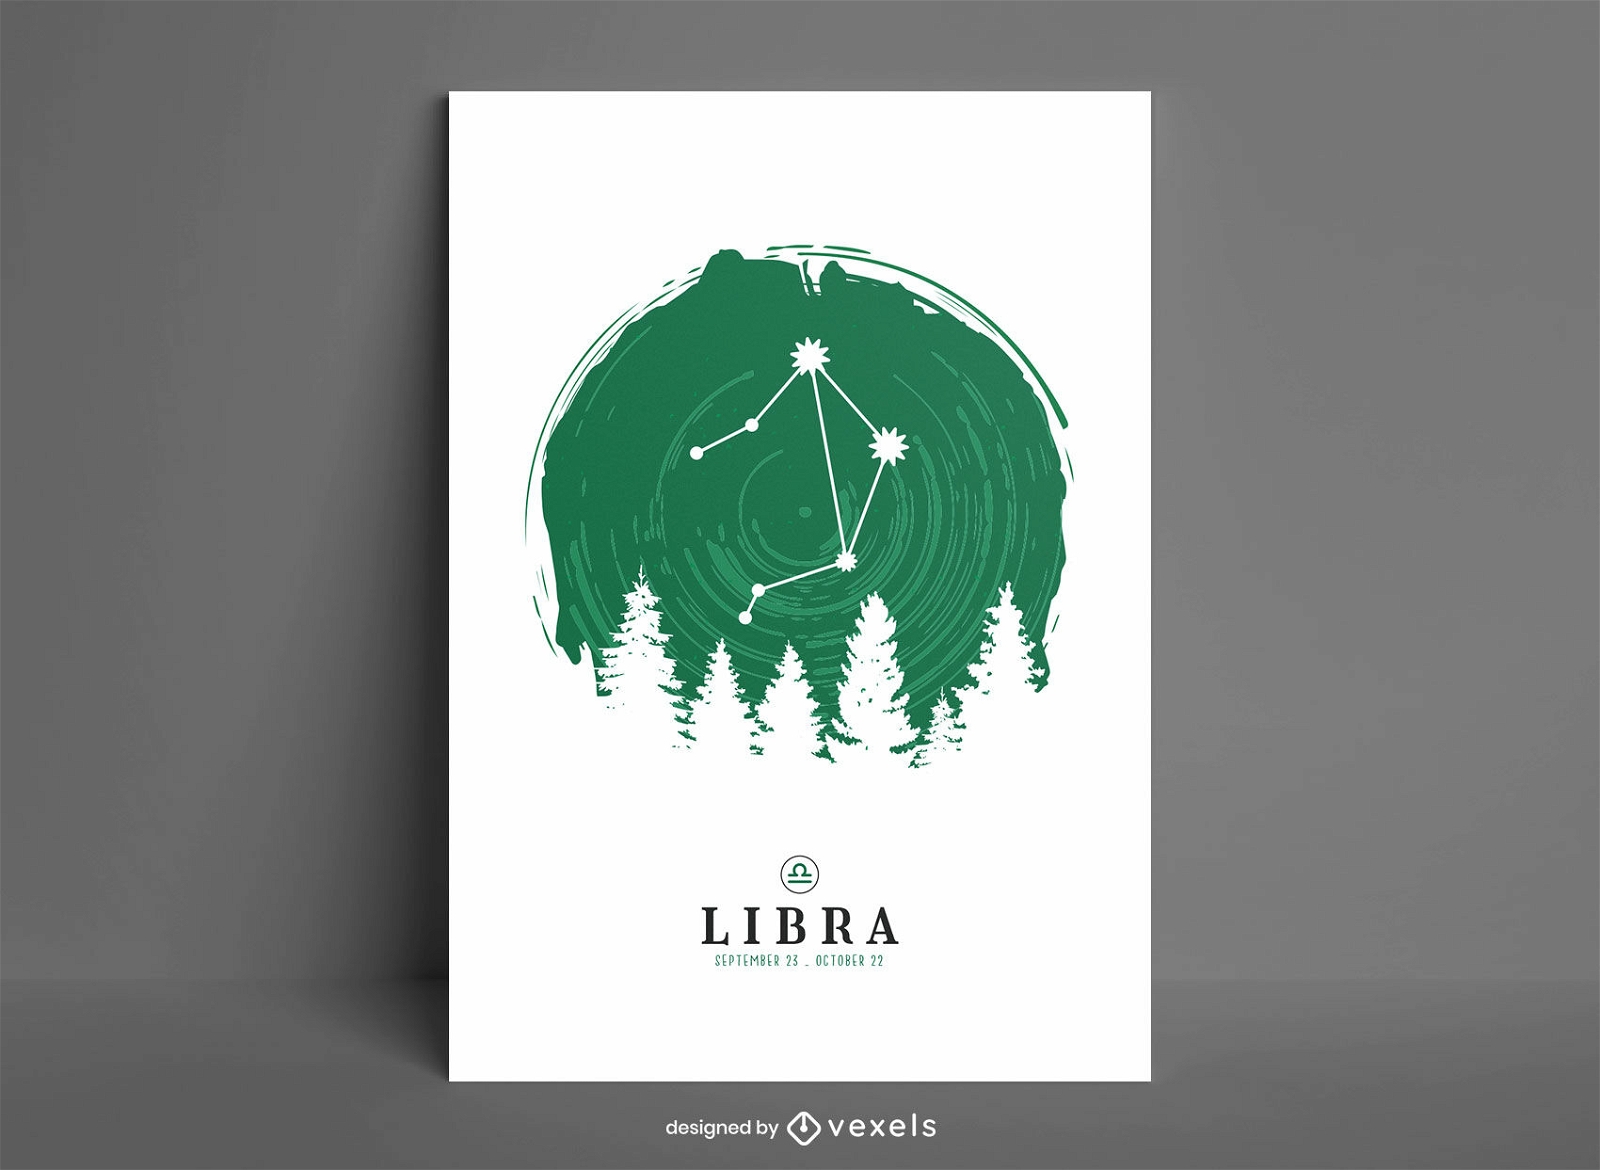 Libra constellation poster design